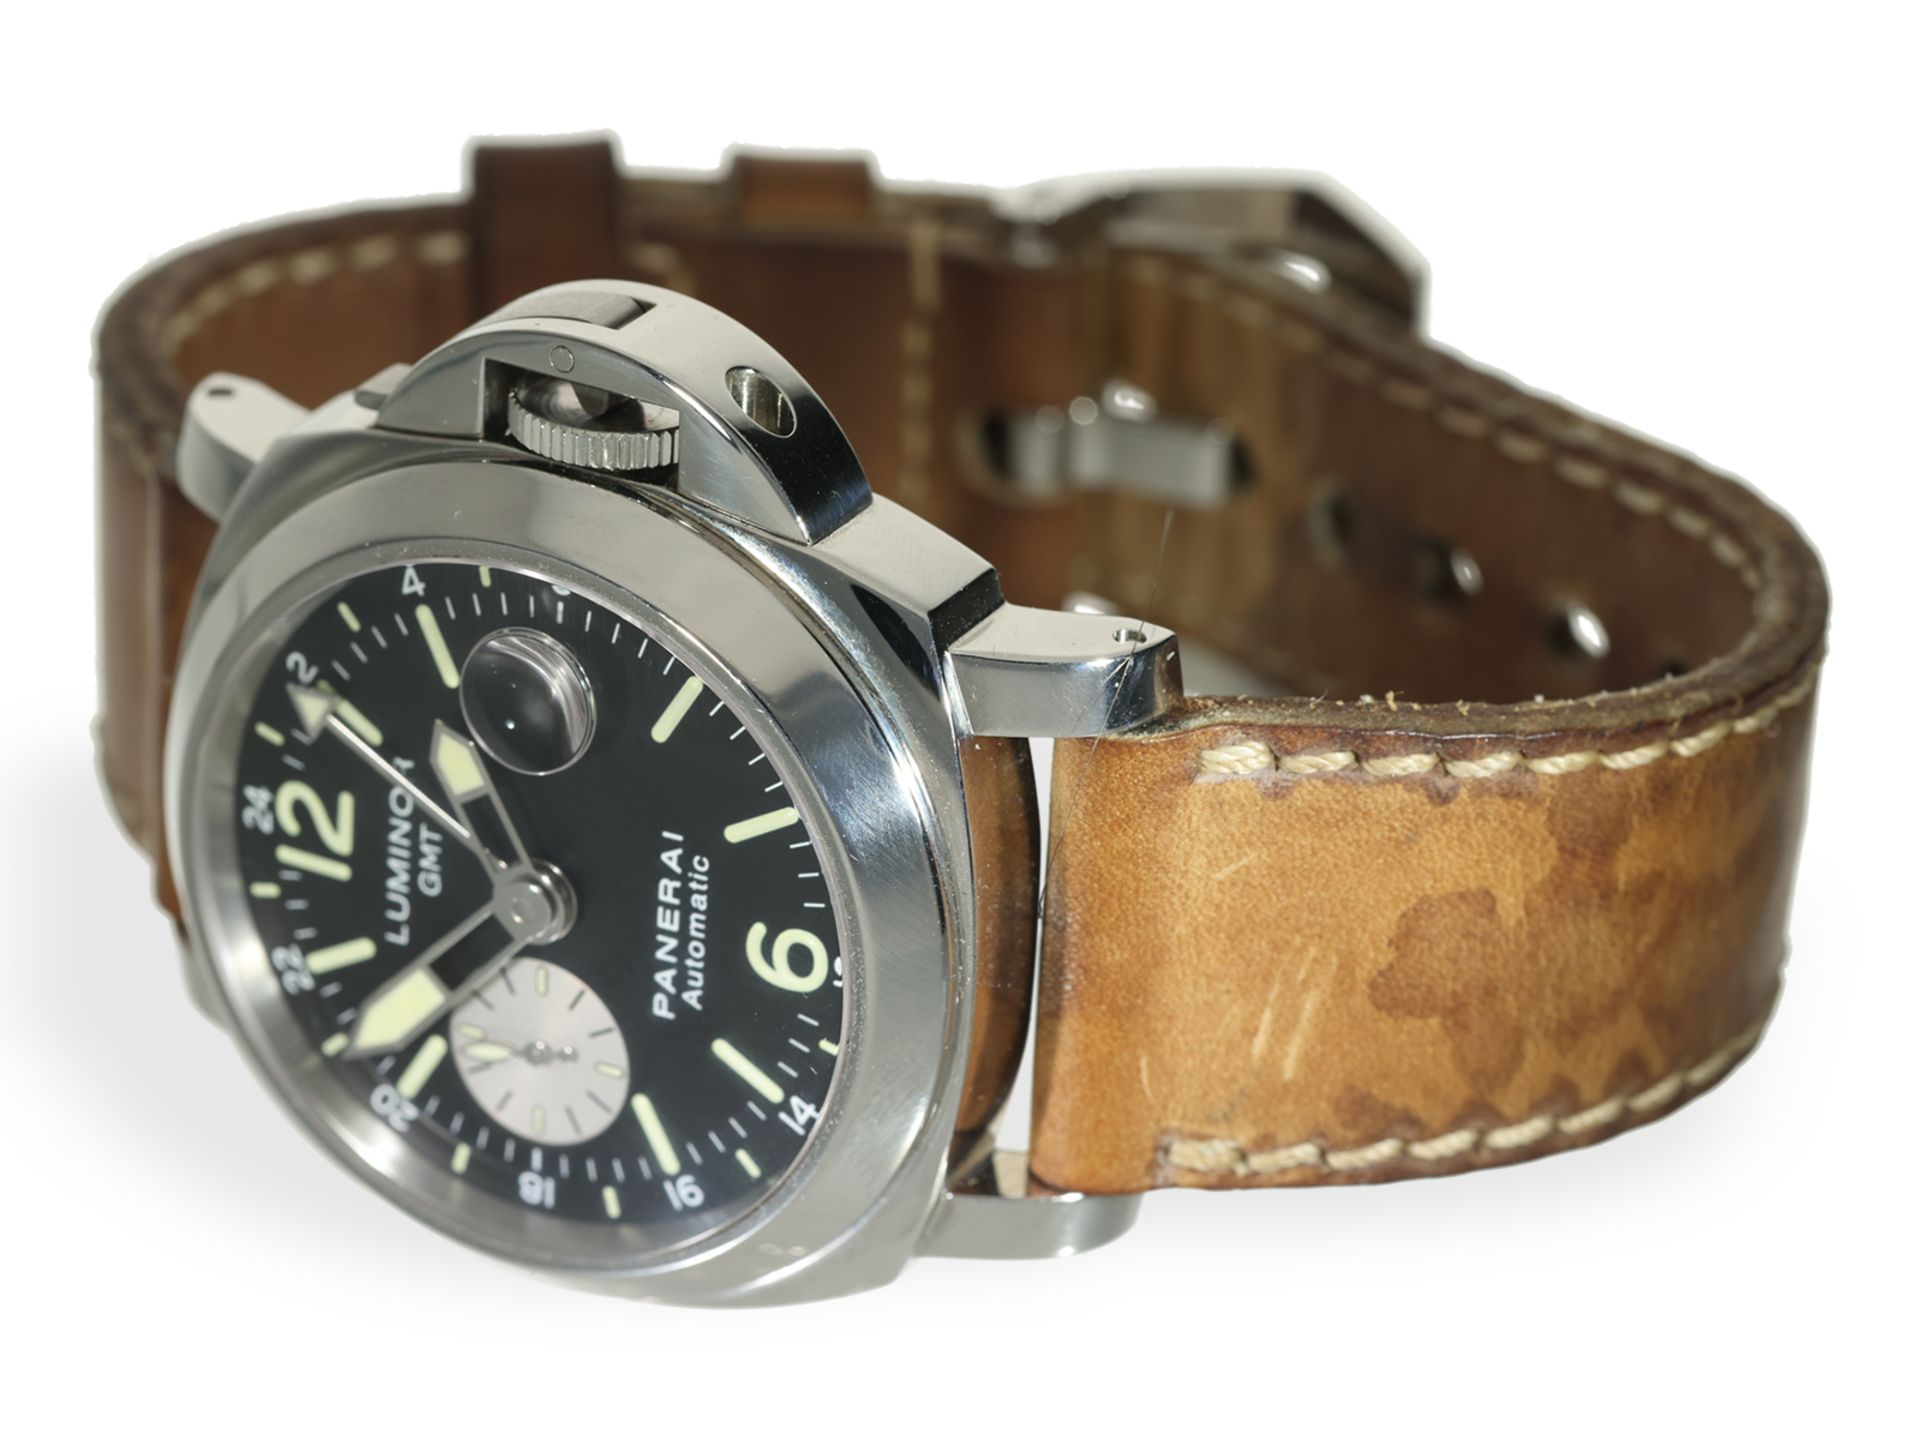 Wristwatch: Chronometer Panerai Luminor GMT REF. OP 6761, No. 0001, full set from 2013 - Image 2 of 10